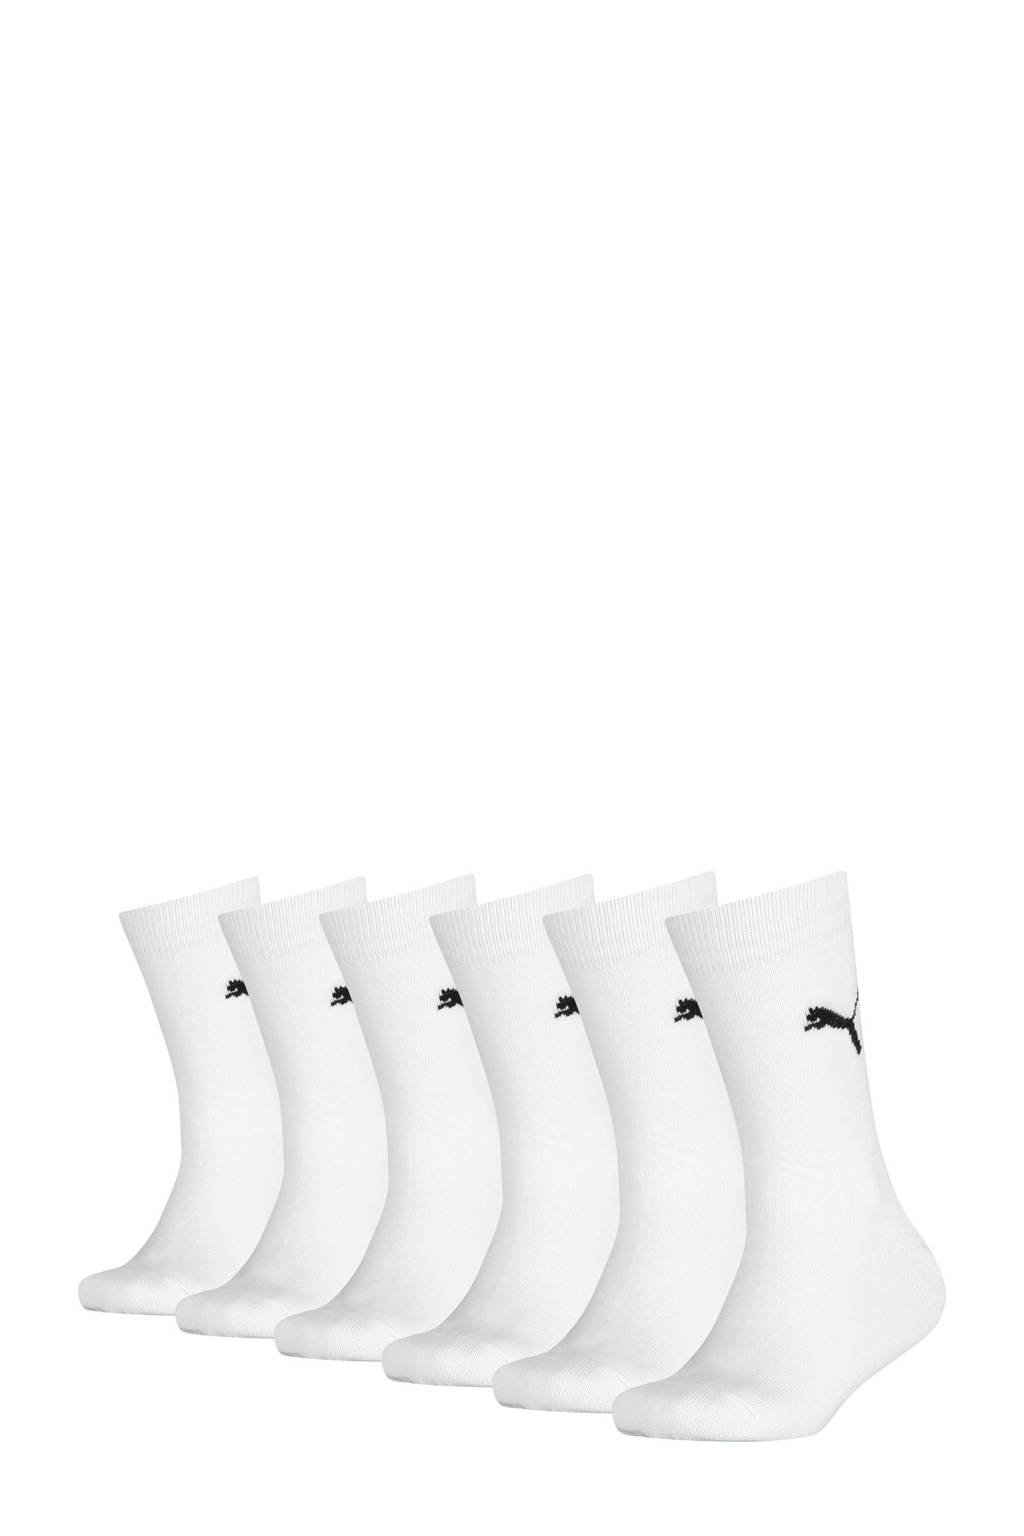 Puma sokken - set van 6 wit, Wit